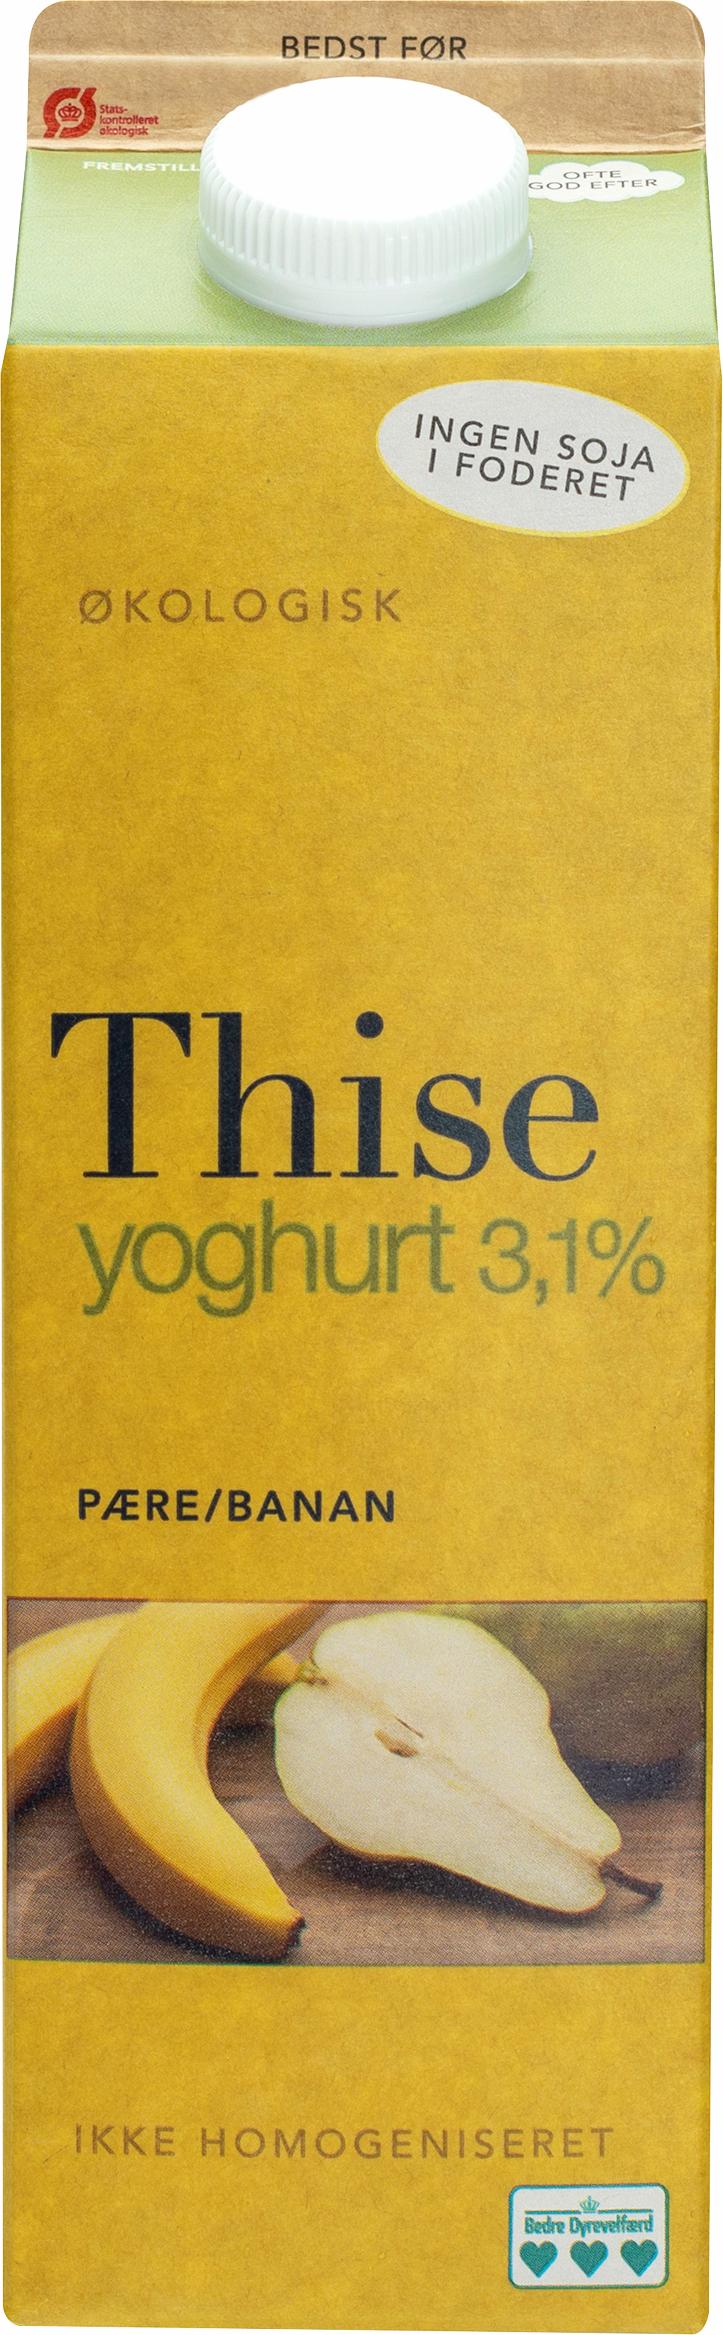 Thise Yoghurt Pære/Banan 3,0% 1000g